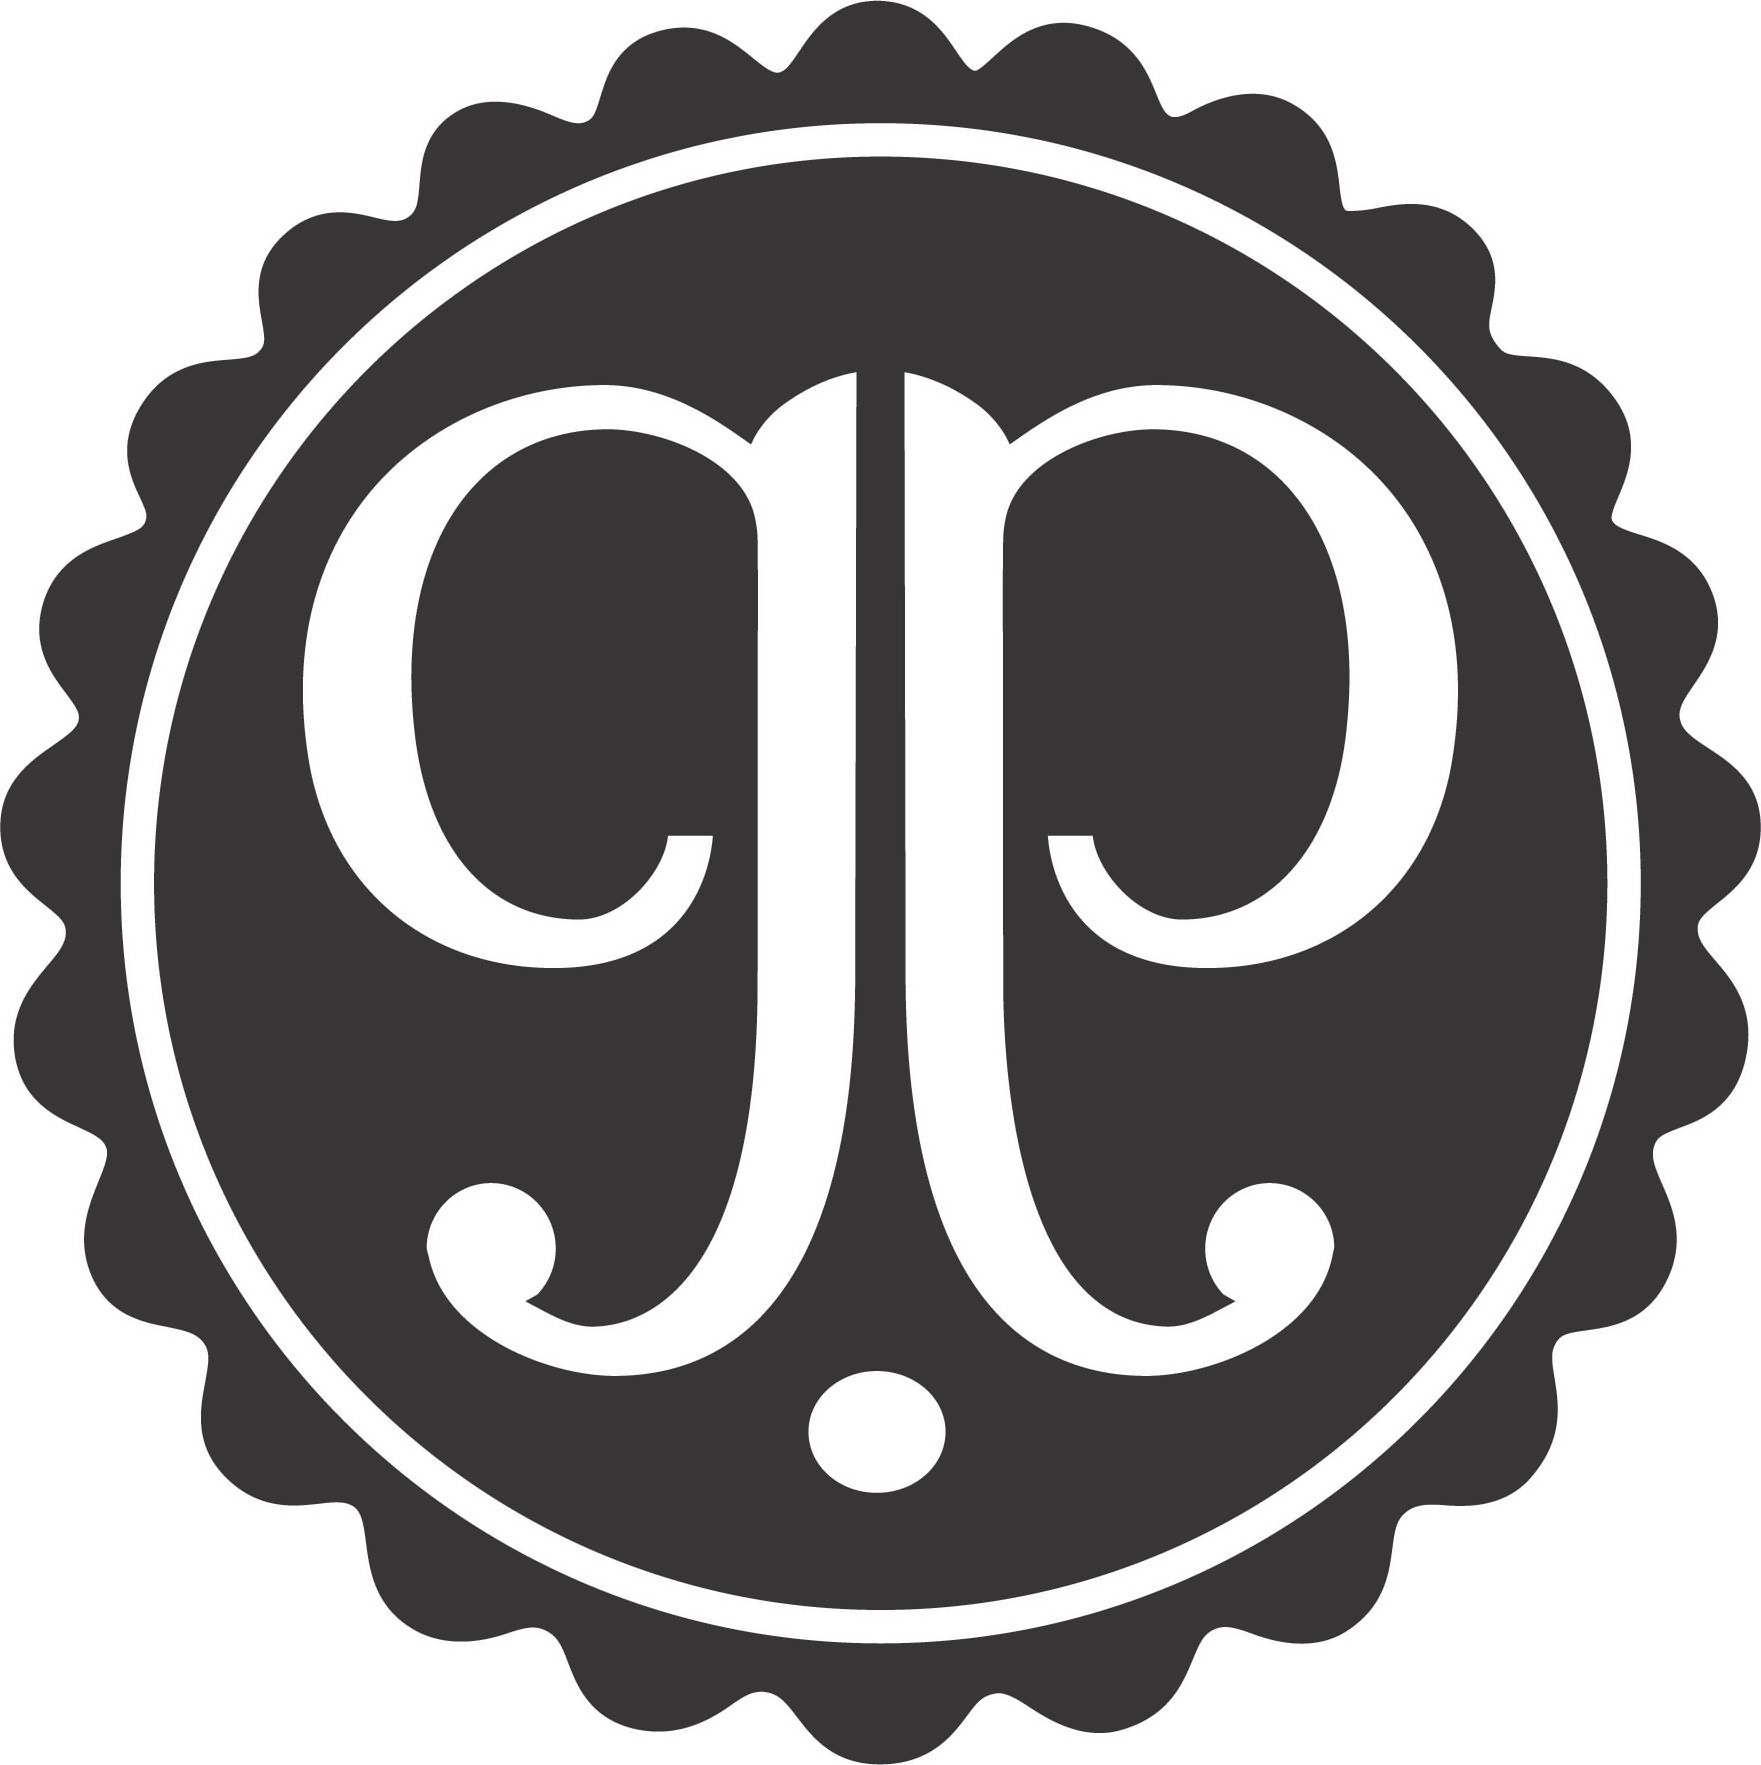 Trademark Logo GP